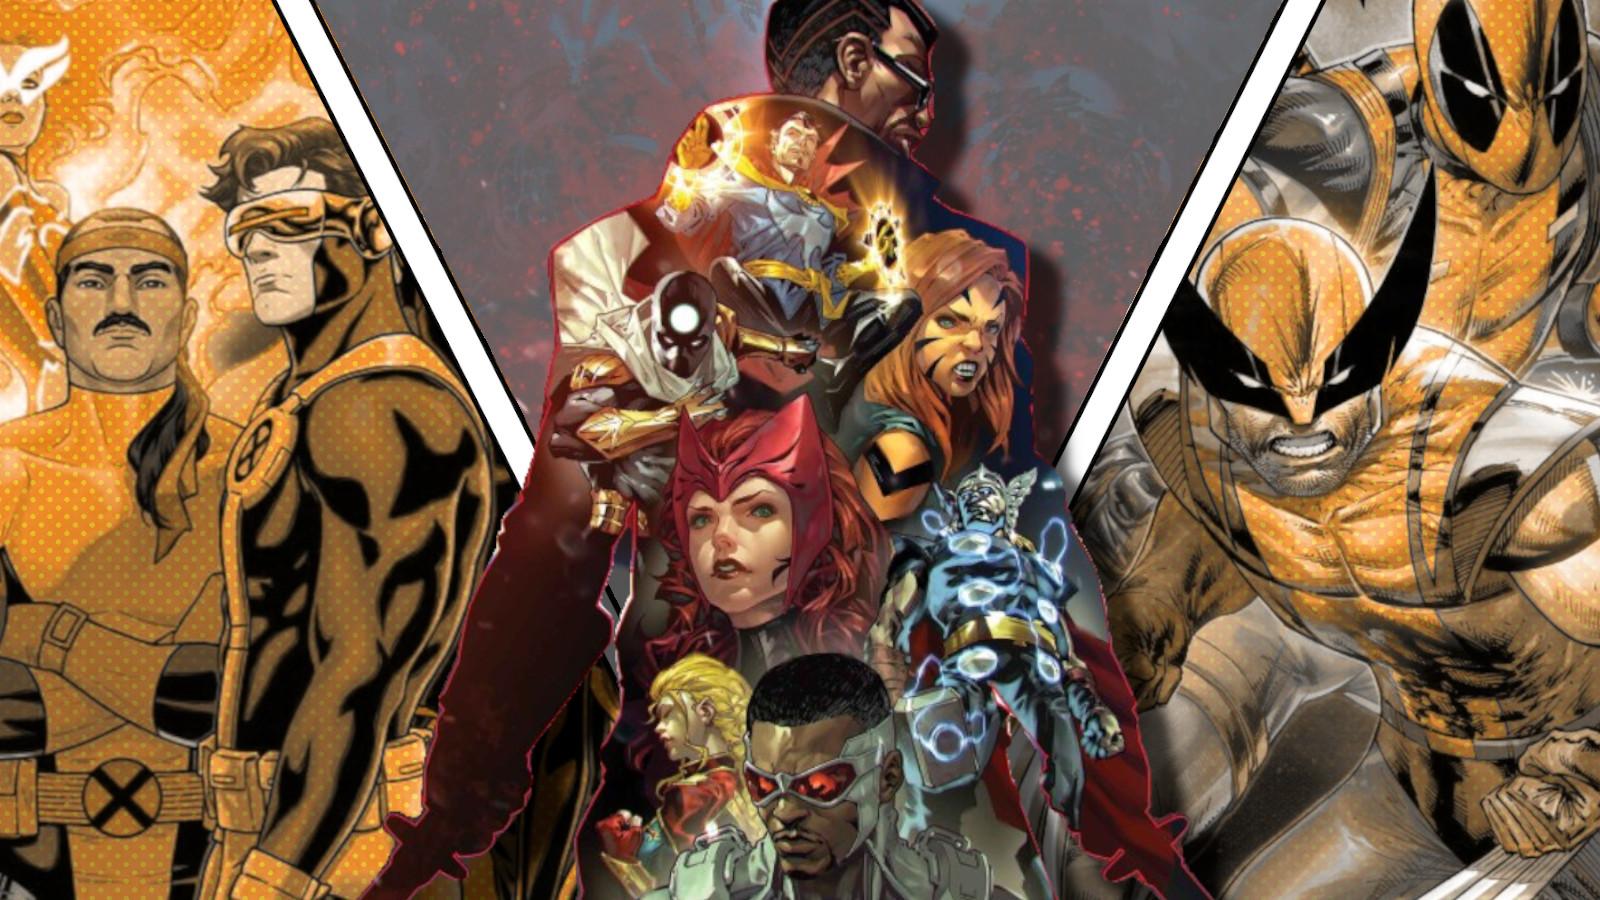 X-Men, Blood Hunt, and Deadpool/Wolverine key art.